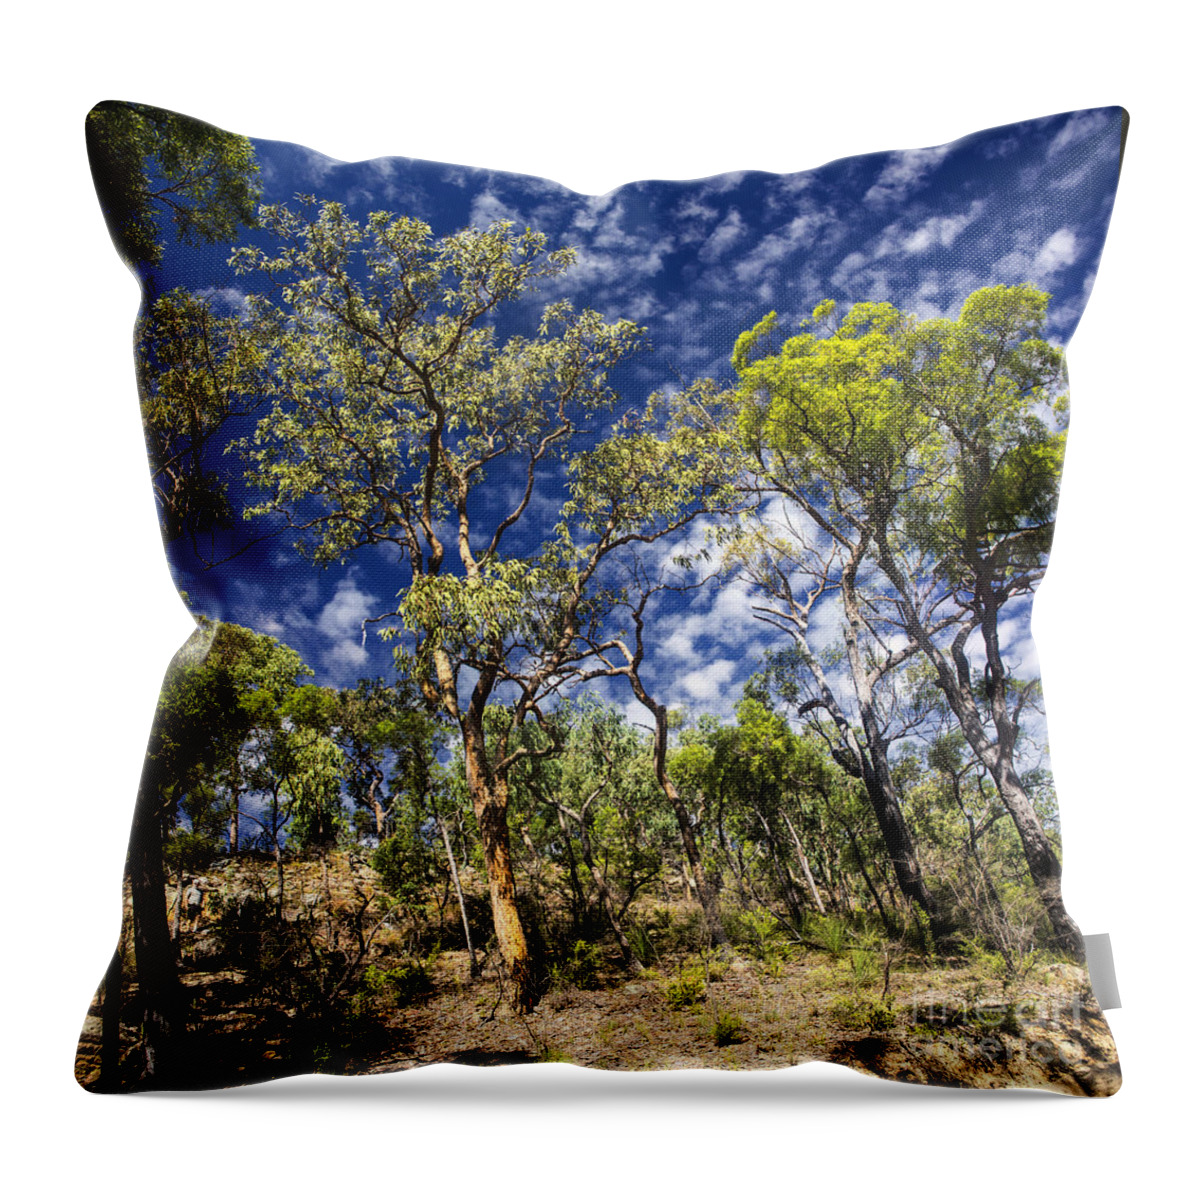 Australian Bush Throw Pillow featuring the photograph Australian bushland by Sheila Smart Fine Art Photography